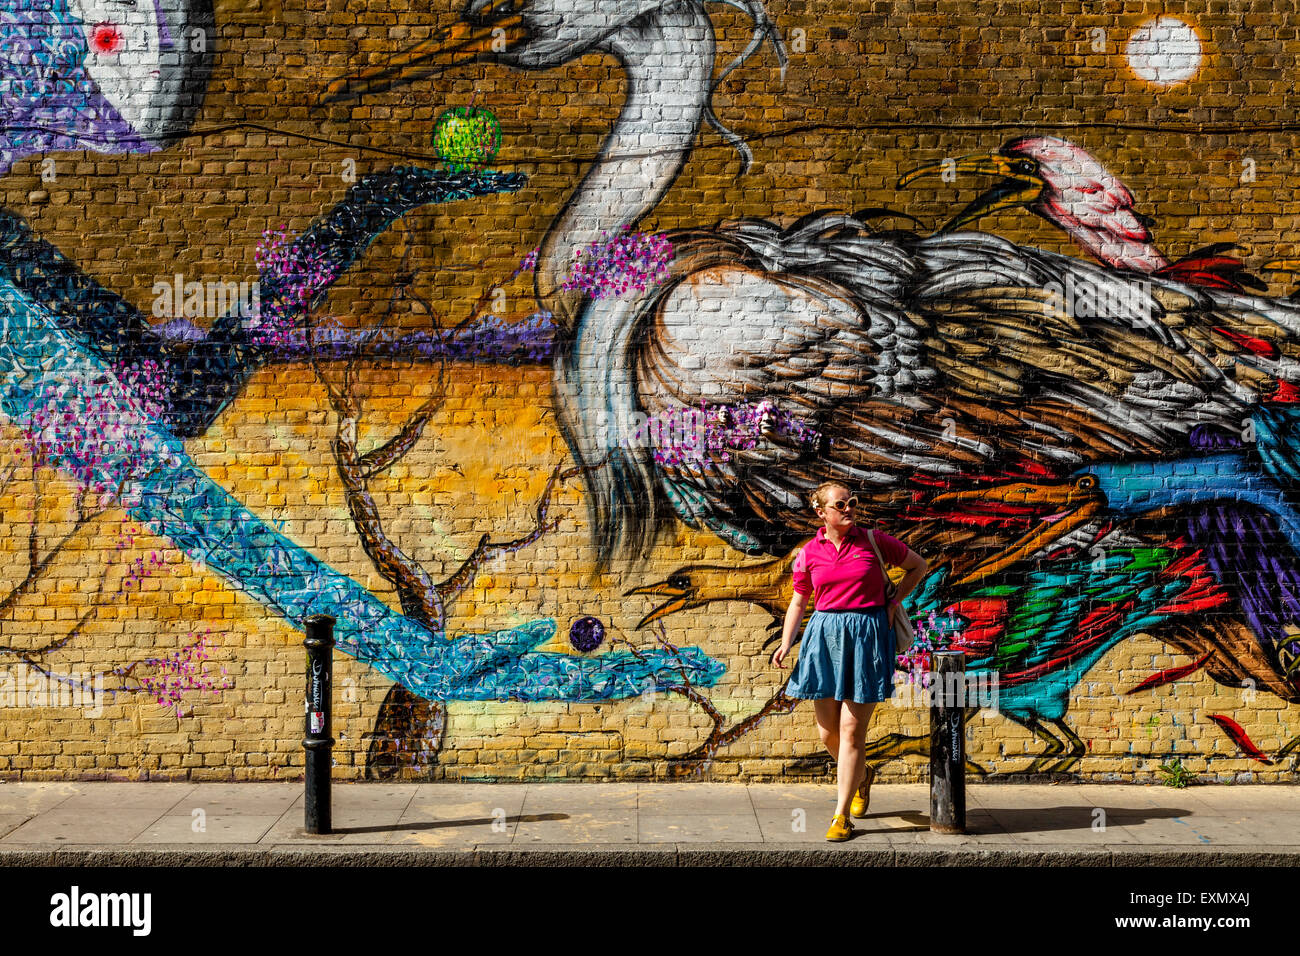 Street Art/Graffiti, off Brick Lane, London, England Stock Photo